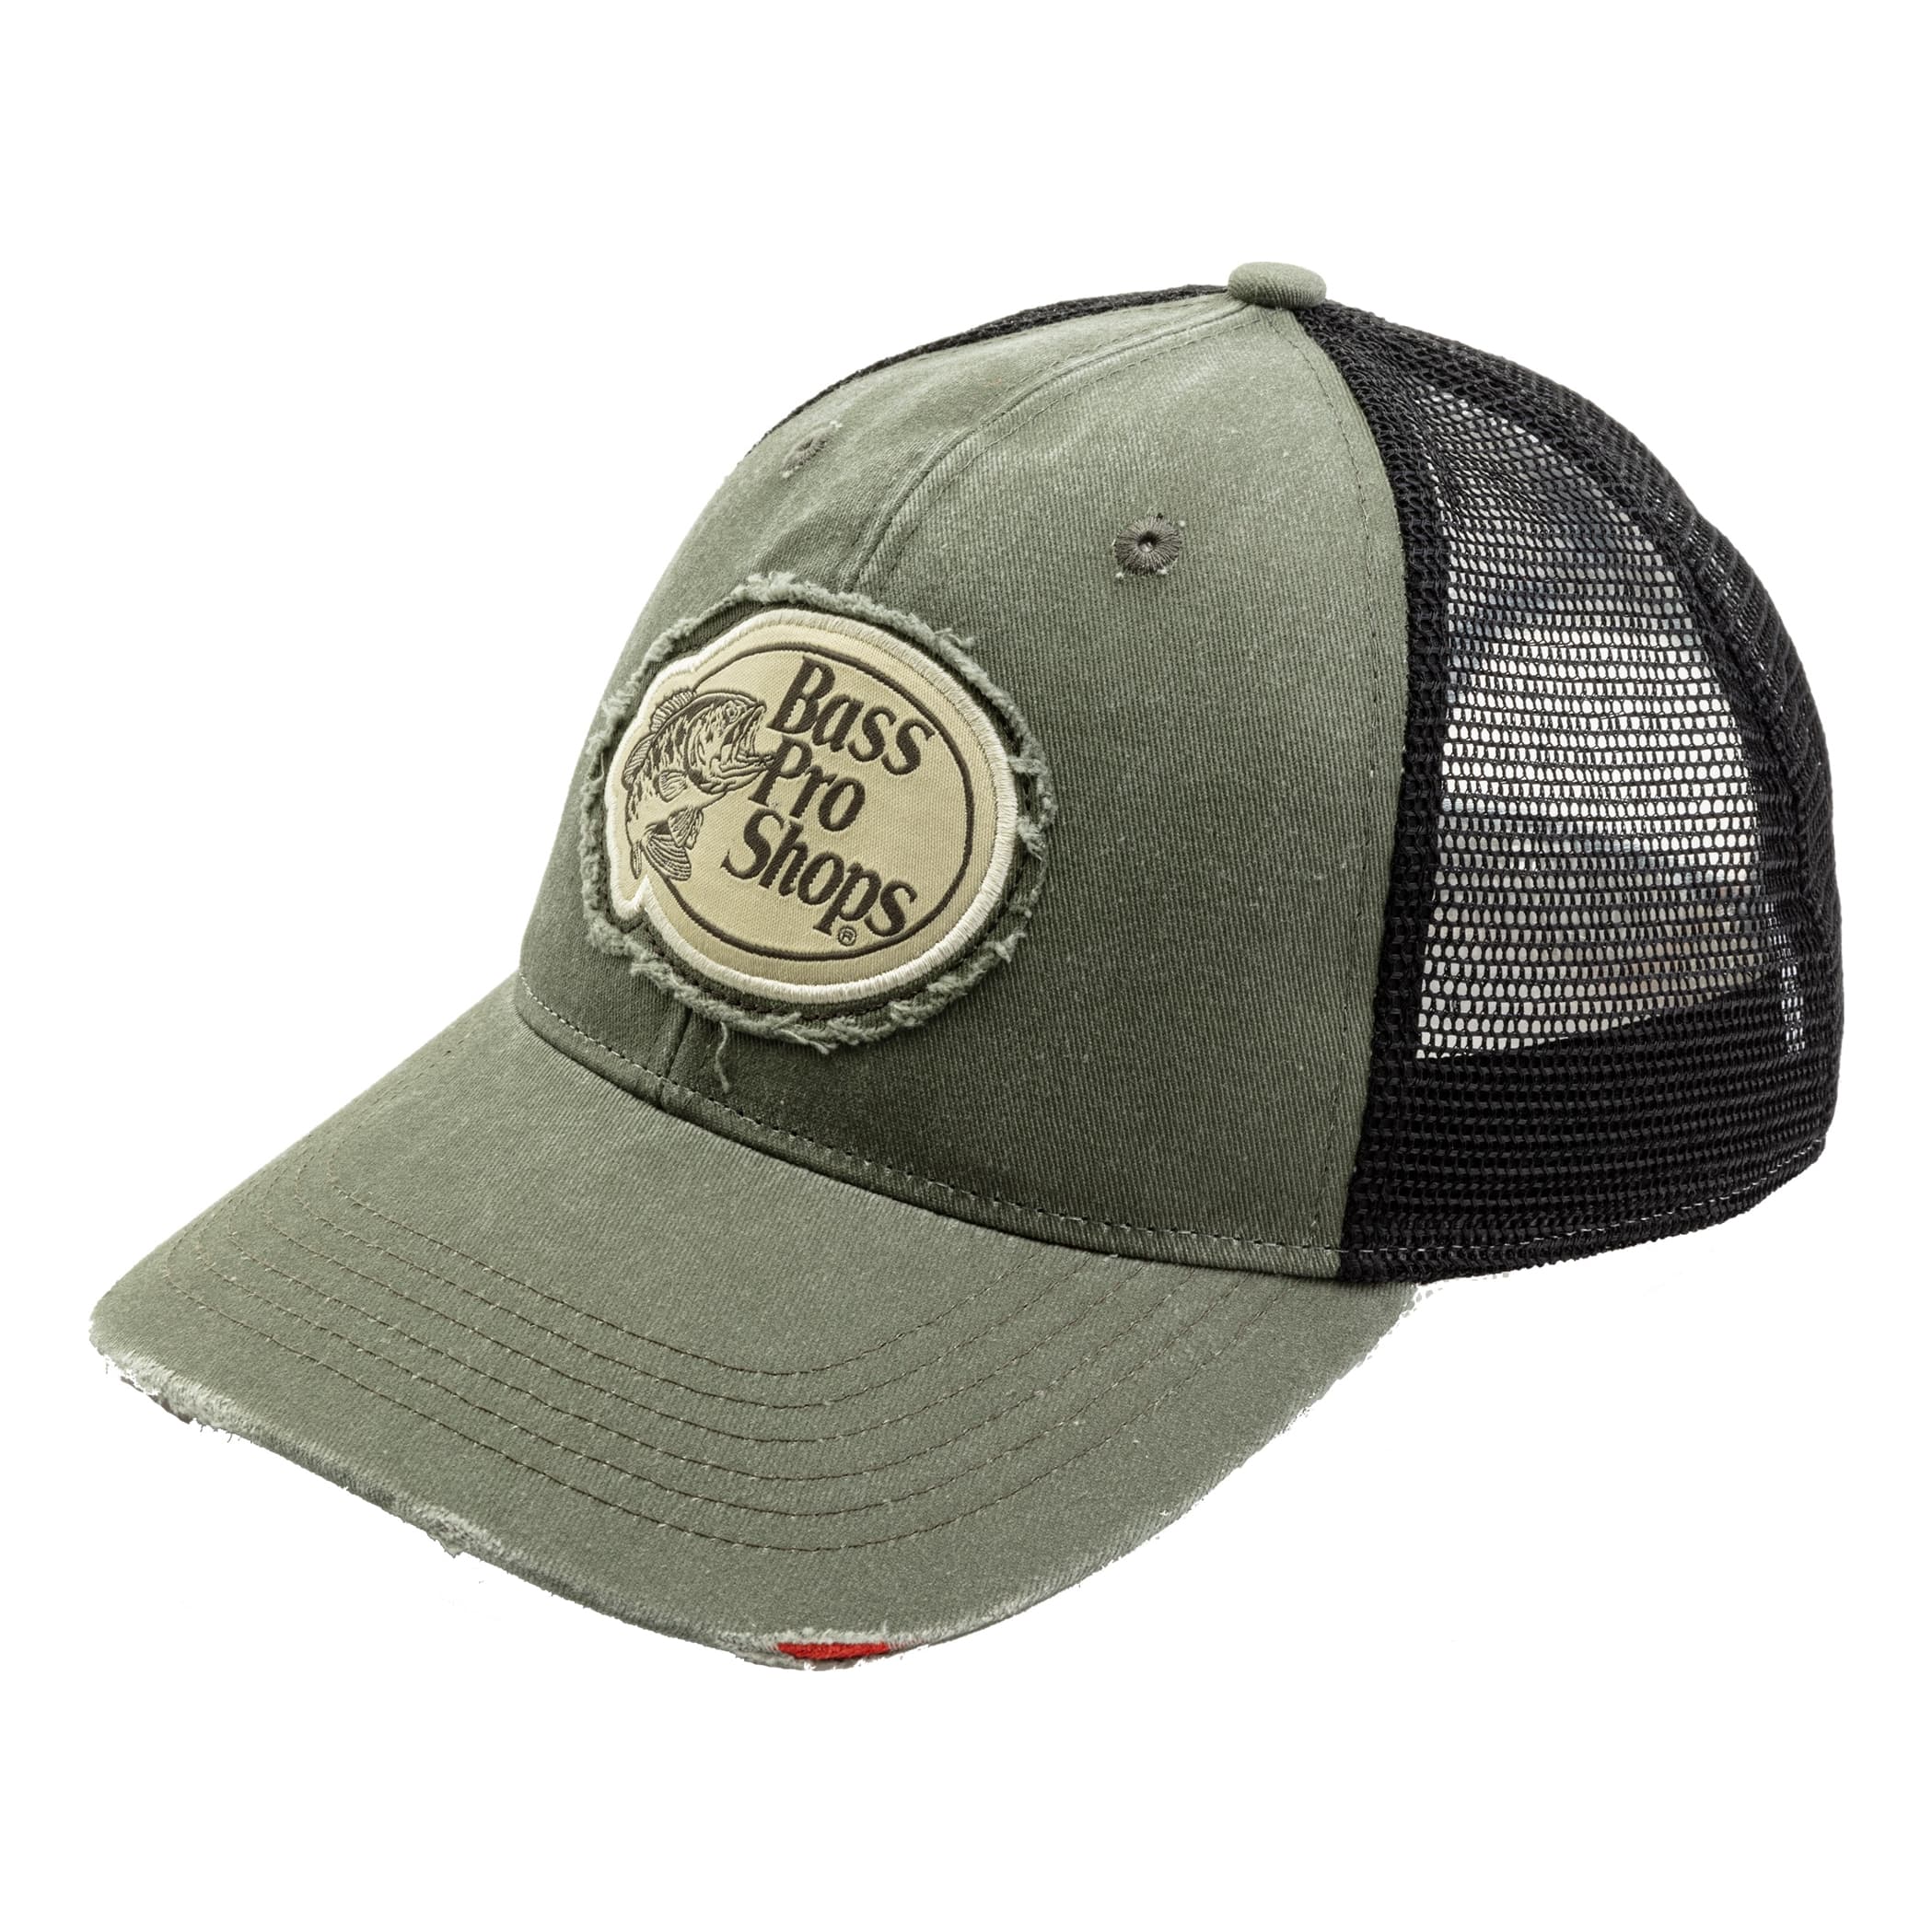 Bass Pro Shops Hat Embroidered Logo Mesh Fishing Hunting Trucker Cap  Snapback